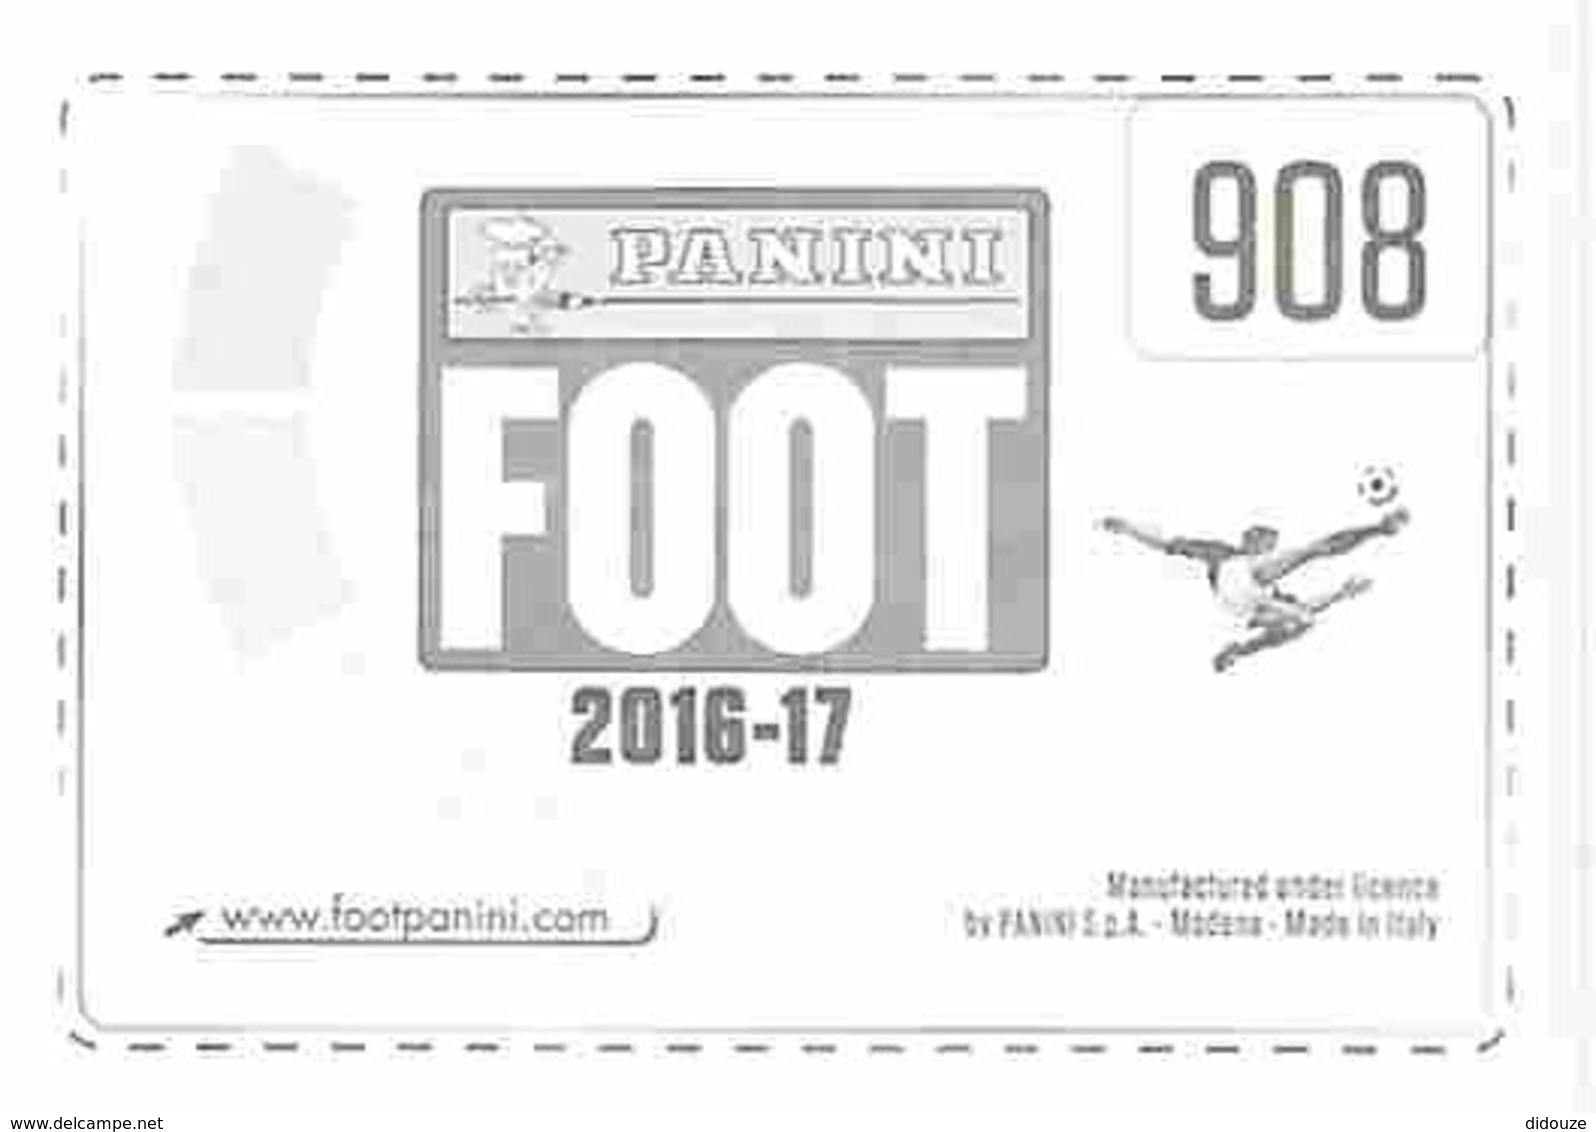 Stickers Panini France Foot 2016-2017 - 908 - Strasbourg - Équipe Strasbourg - Voir Scans Recto-Verso - Edition Française